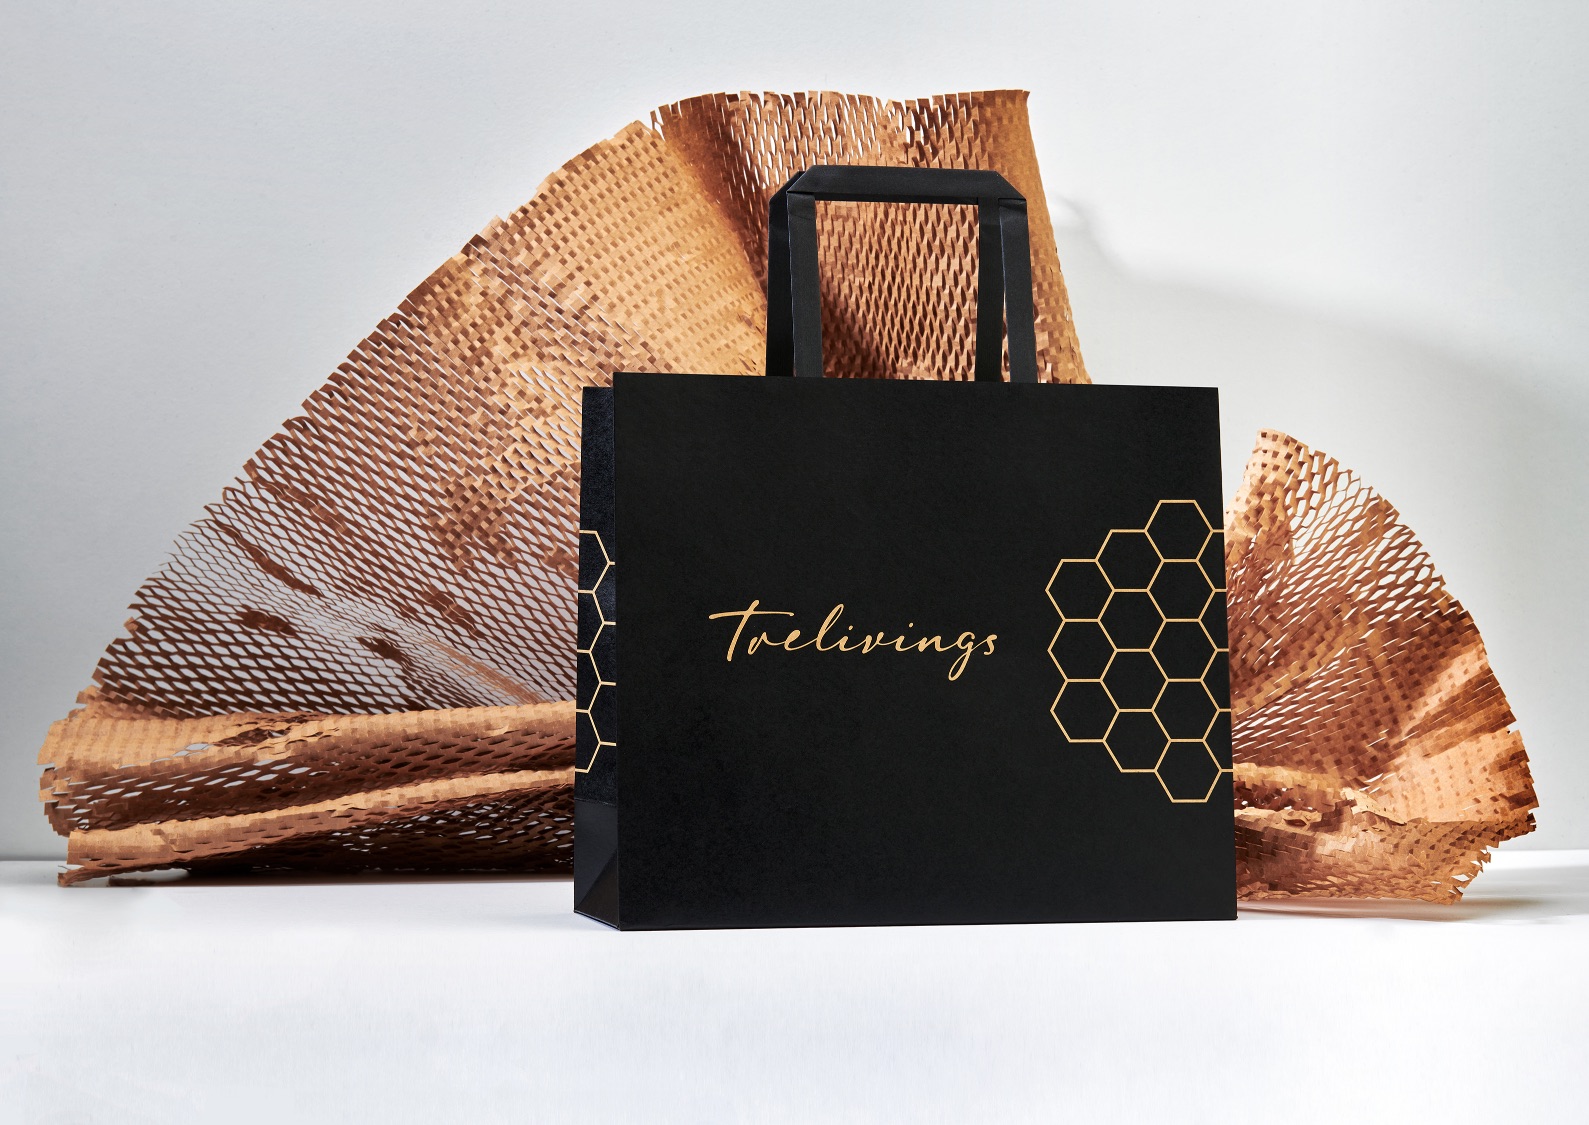 Trelivings Jarrah Honey by Harcus Design